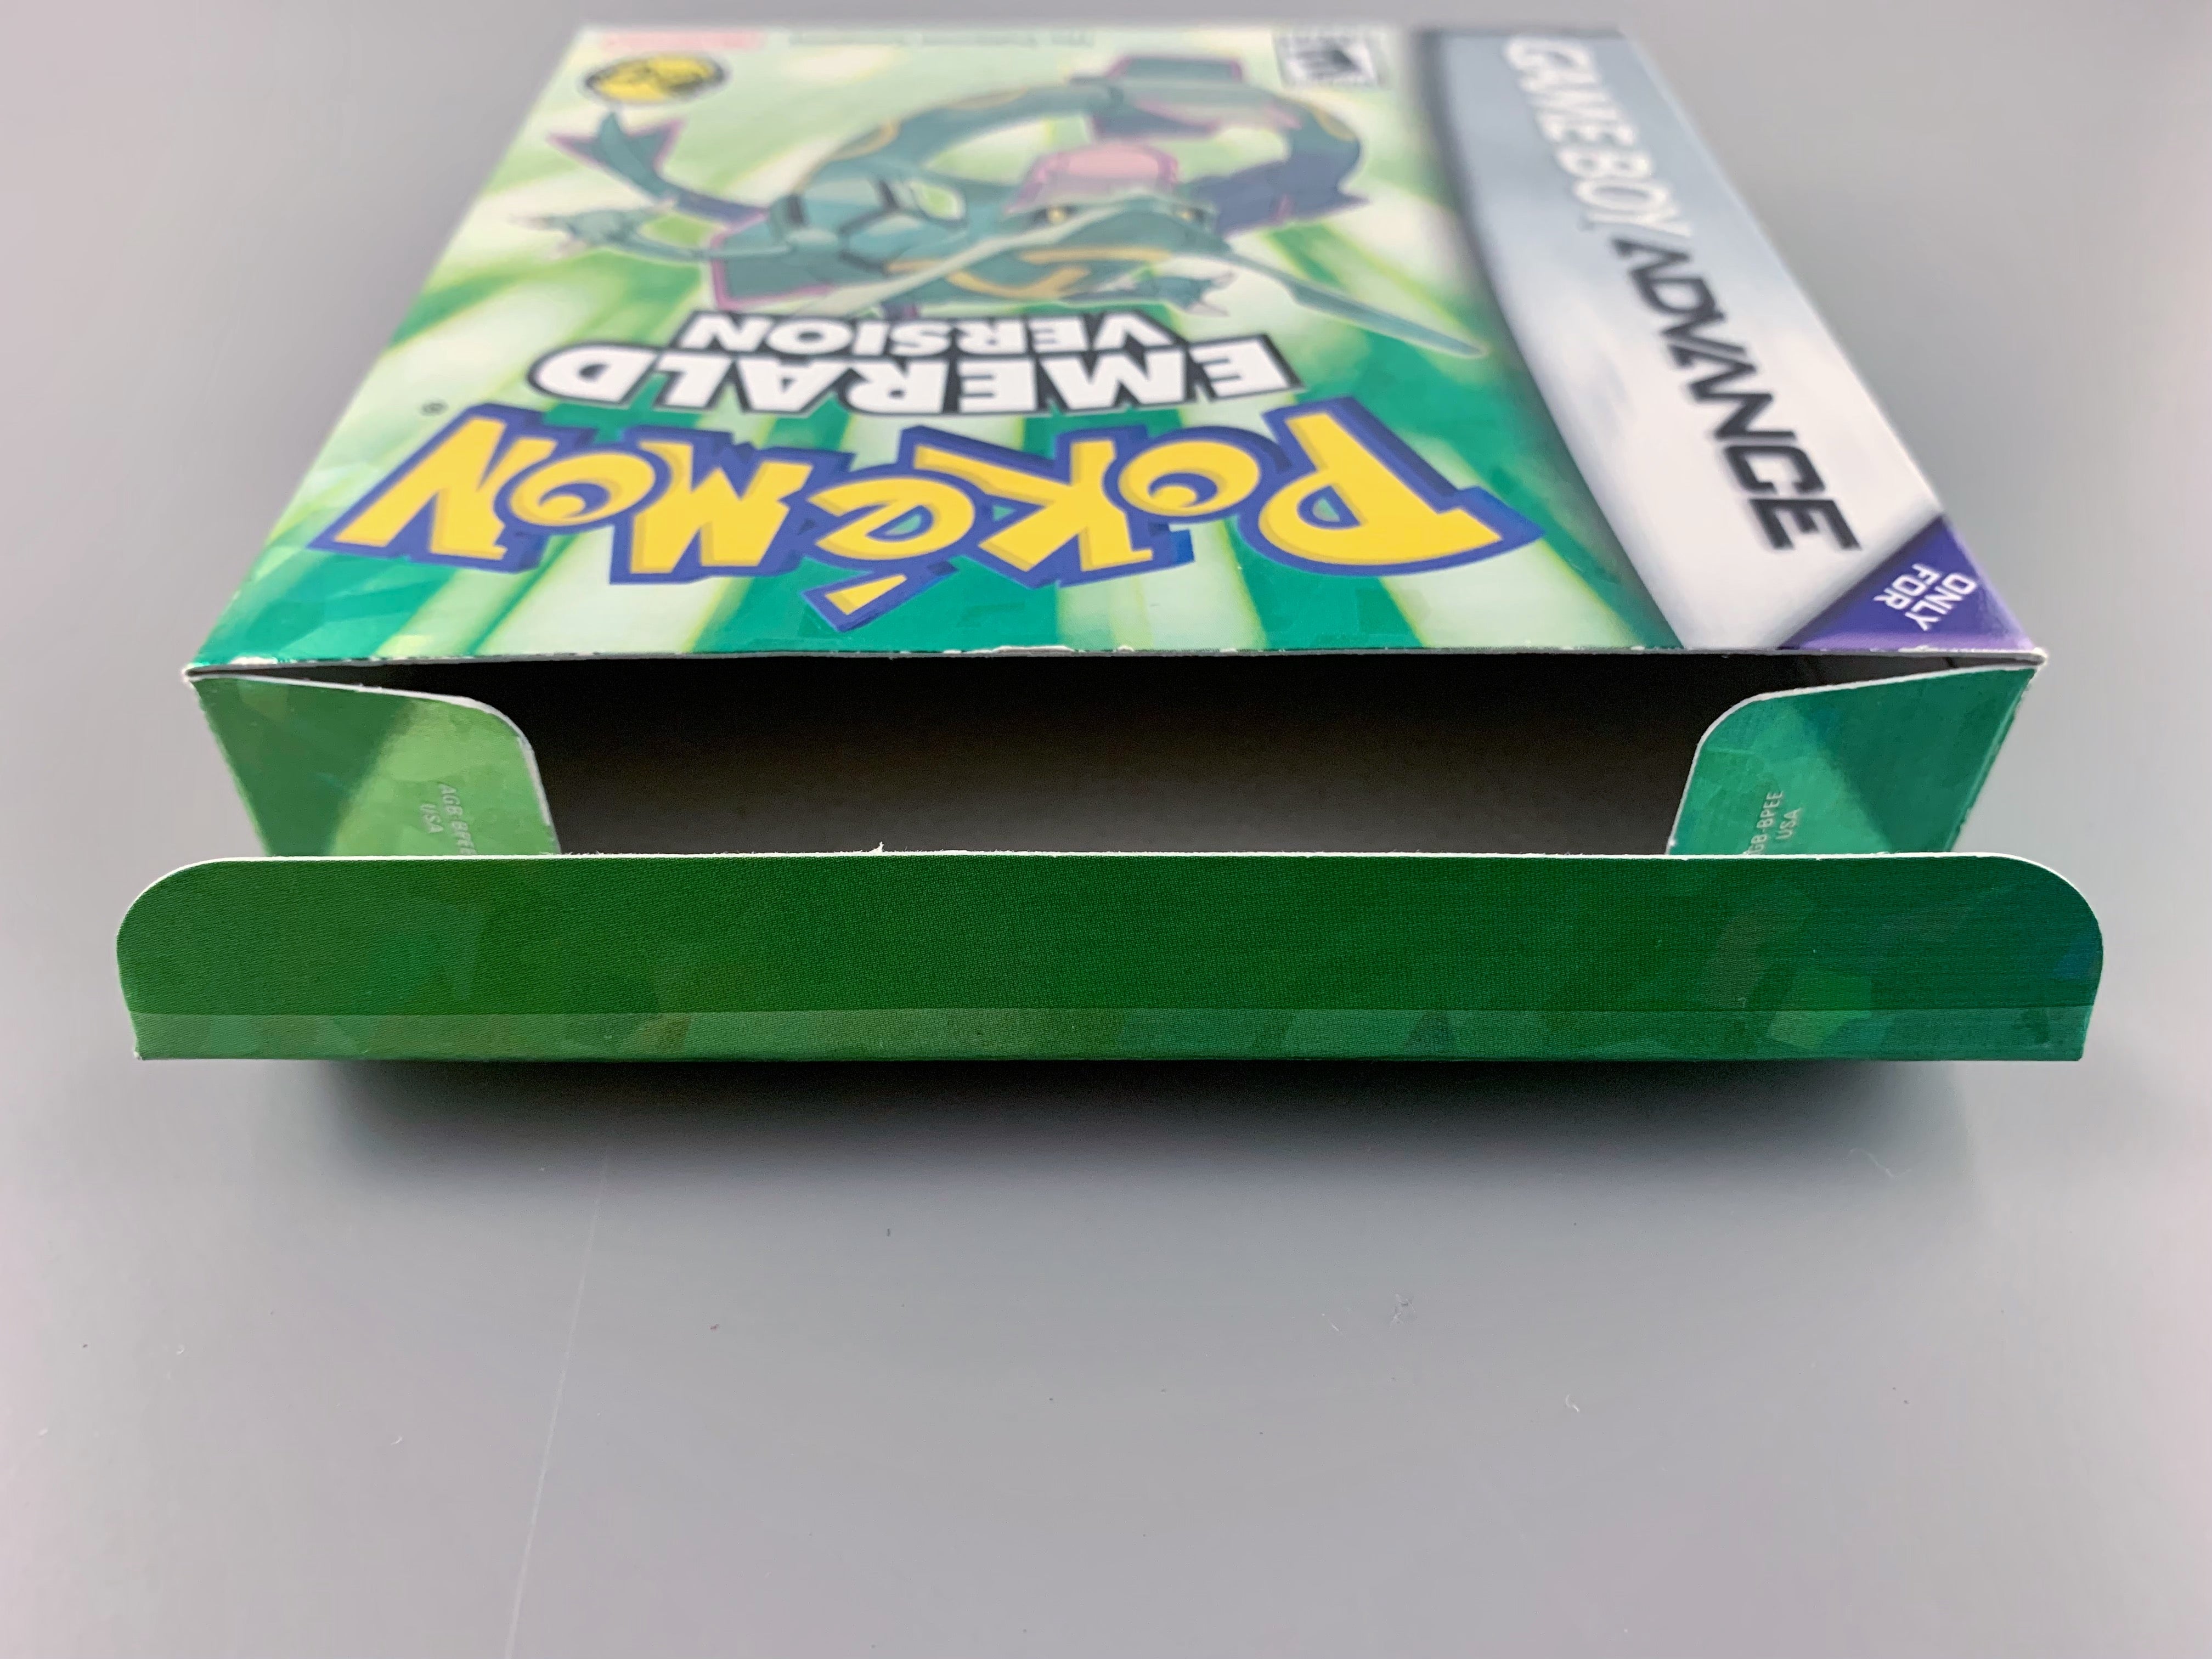 Nintendo Game Boy Advance Pokemon Emerald - 1904 Comics